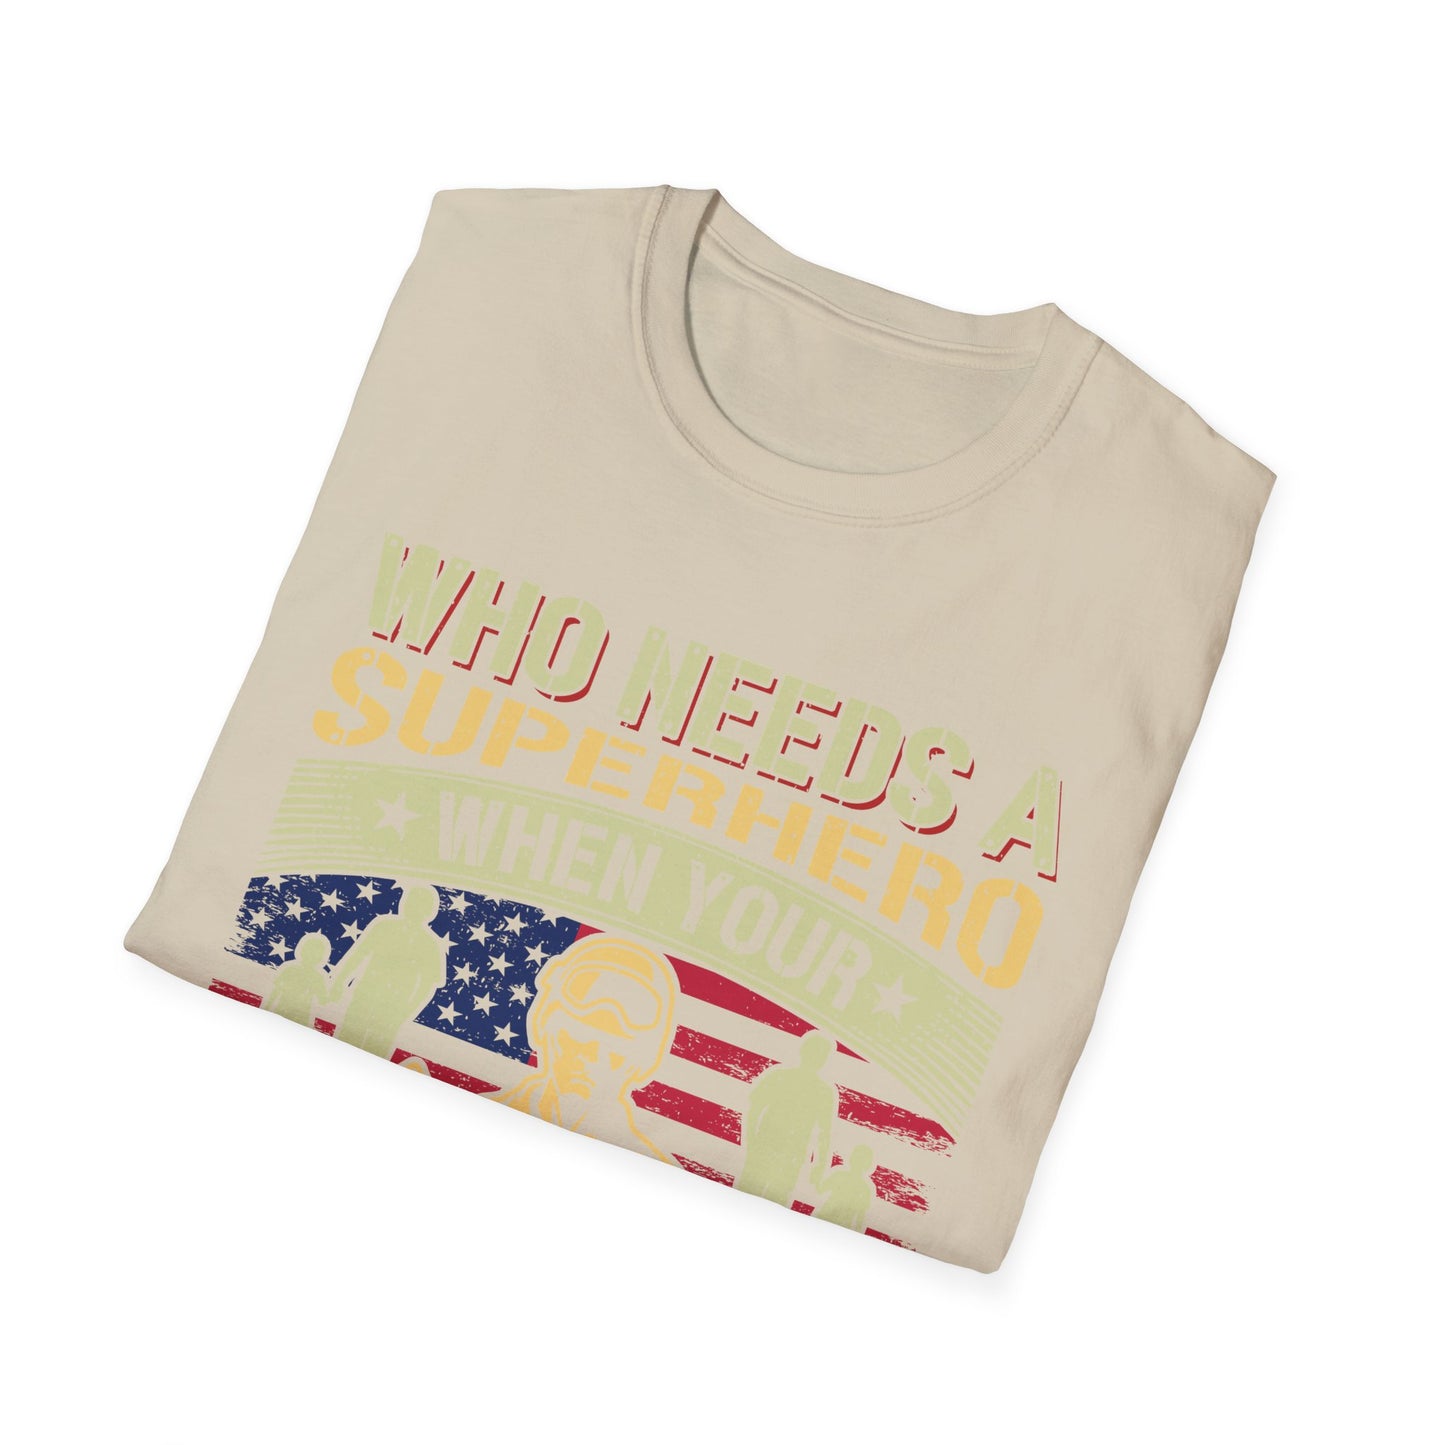 Who Needs a Superhero - Grandpa - Unisex Softstyle T-Shirt